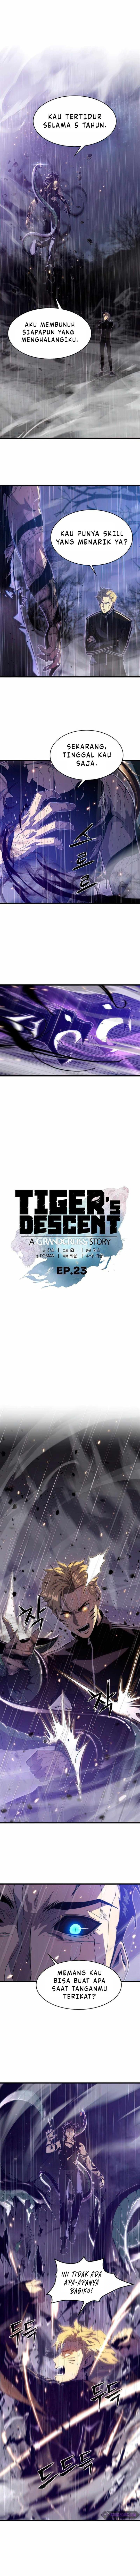 Tiger’s Descent Chapter 23